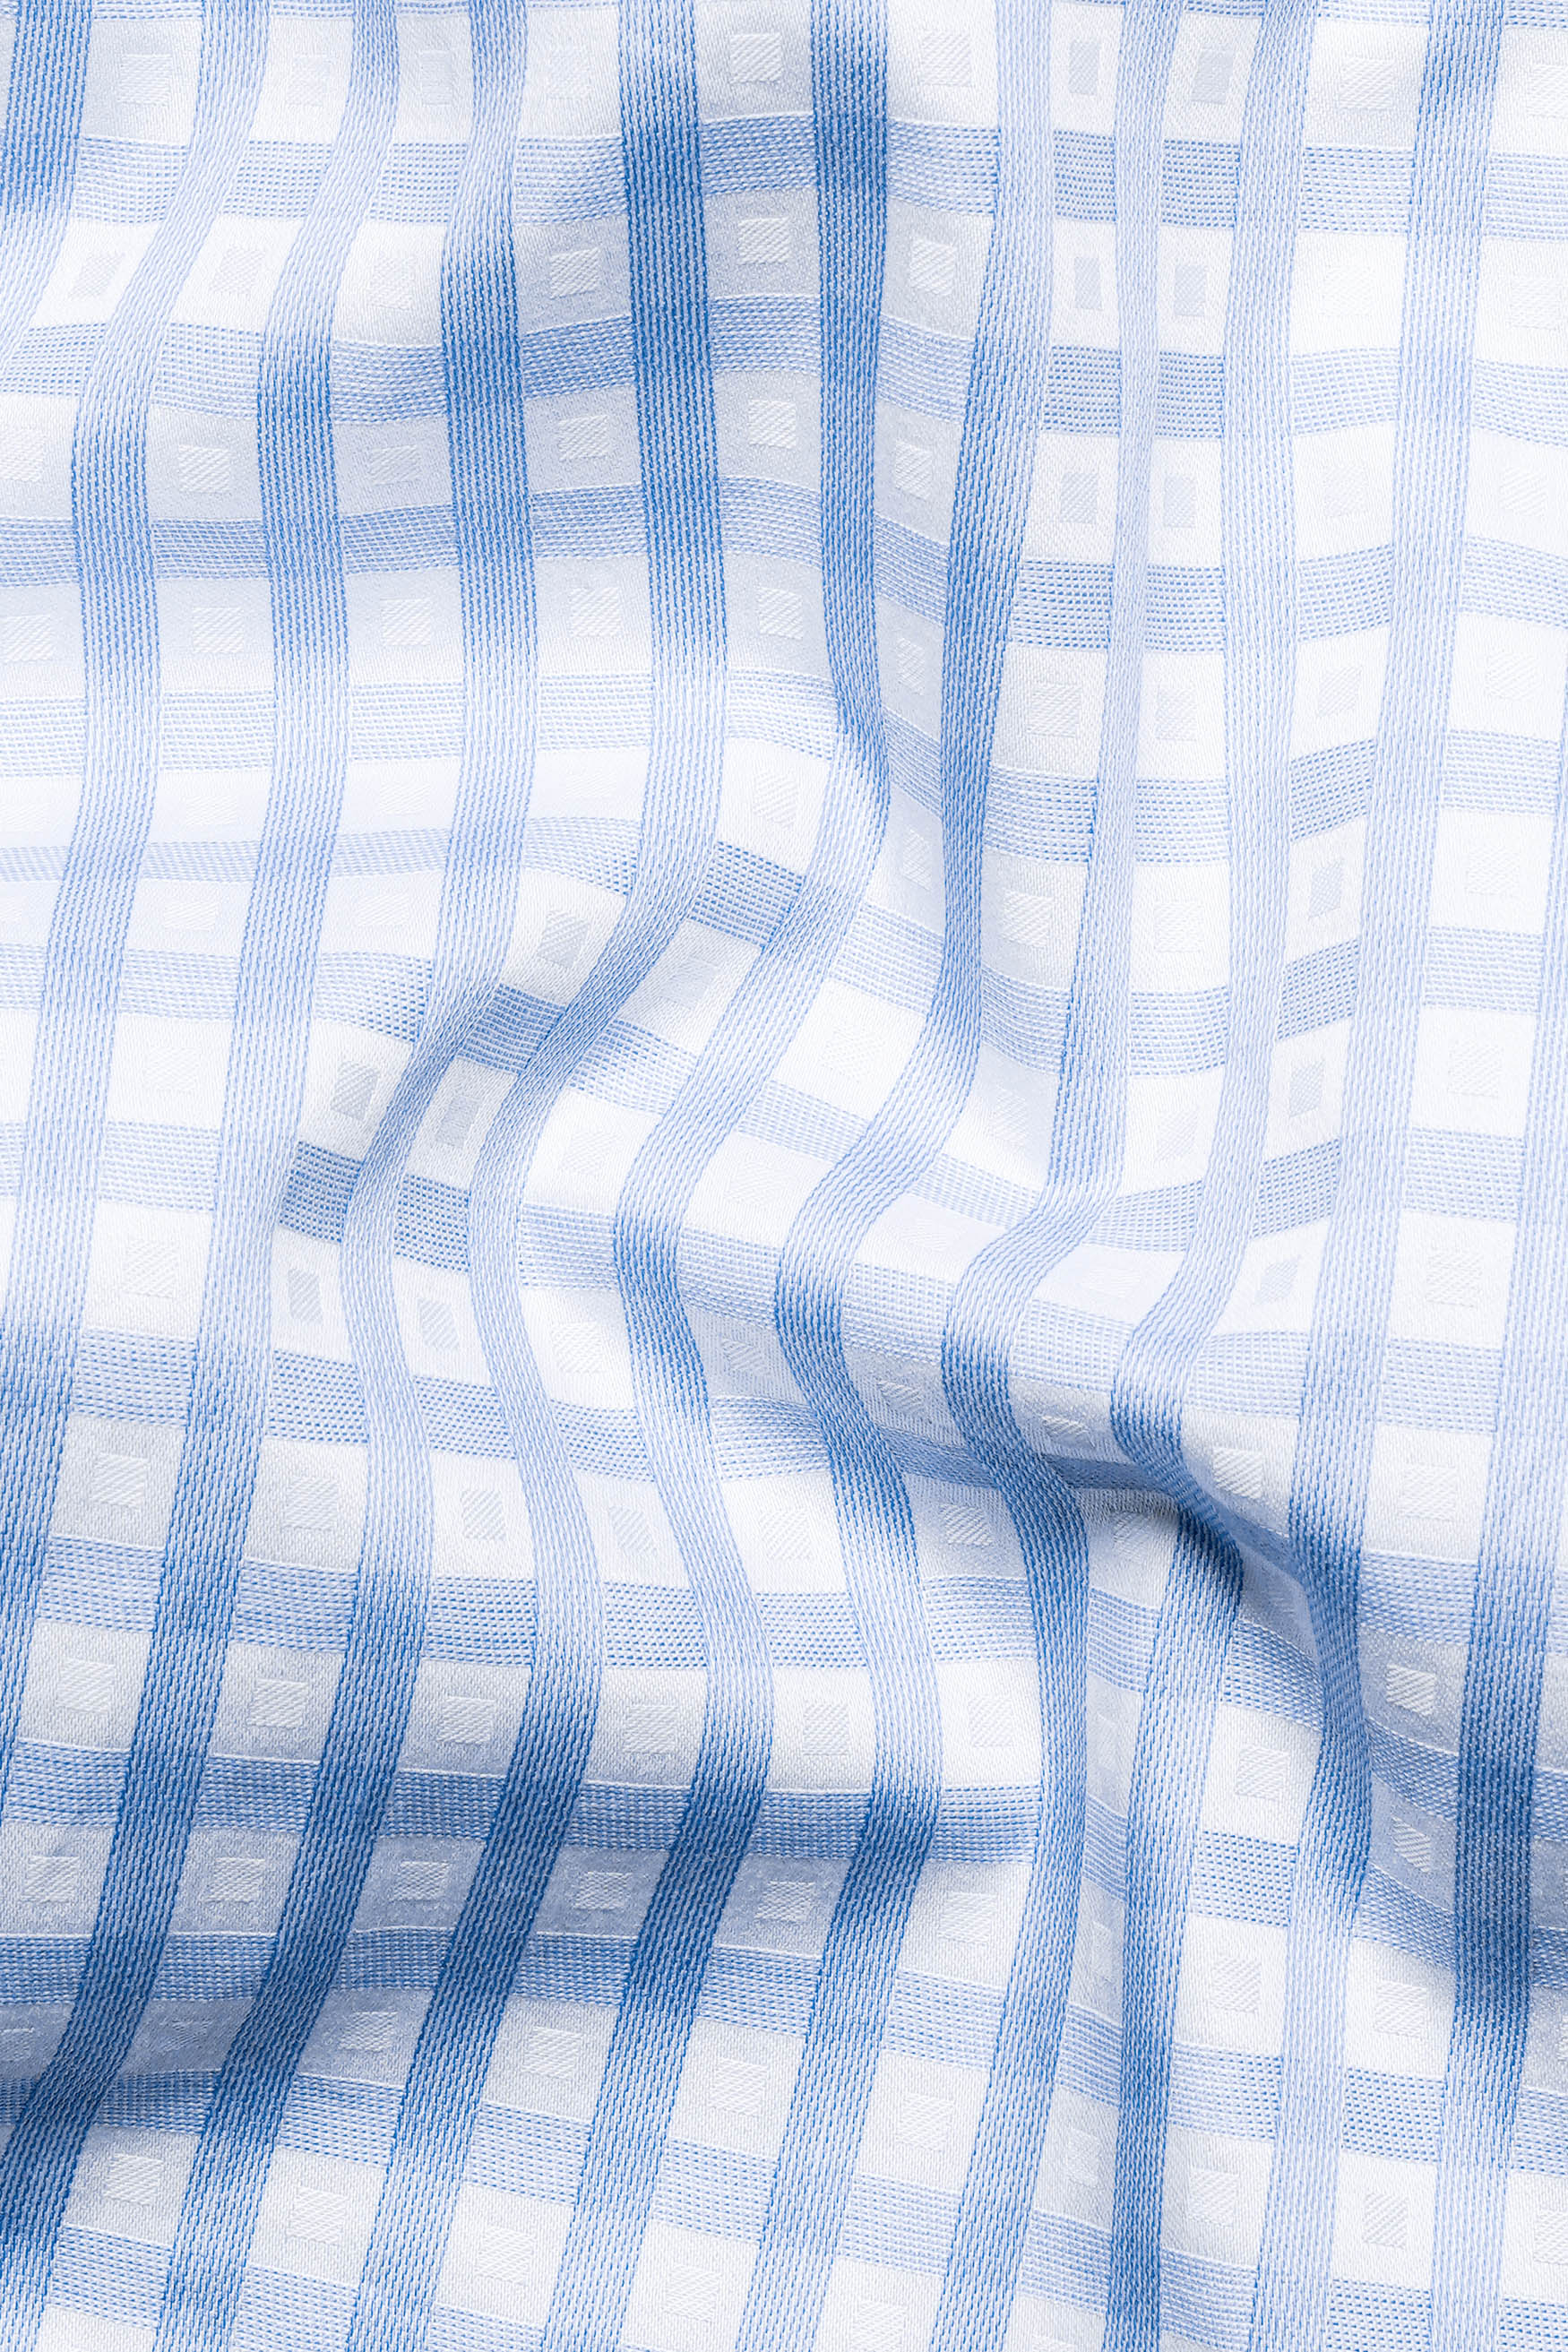 Jordy Blue and White Checked Dobby Textured Premium Giza Cotton Shirt 12113-38, 12113-H-38, 12113-39, 12113-H-39, 12113-40, 12113-H-40, 12113-42, 12113-H-42, 12113-44, 12113-H-44, 12113-46, 12113-H-46, 12113-48, 12113-H-48, 12113-50, 12113-H-50, 12113-52, 12113-H-52